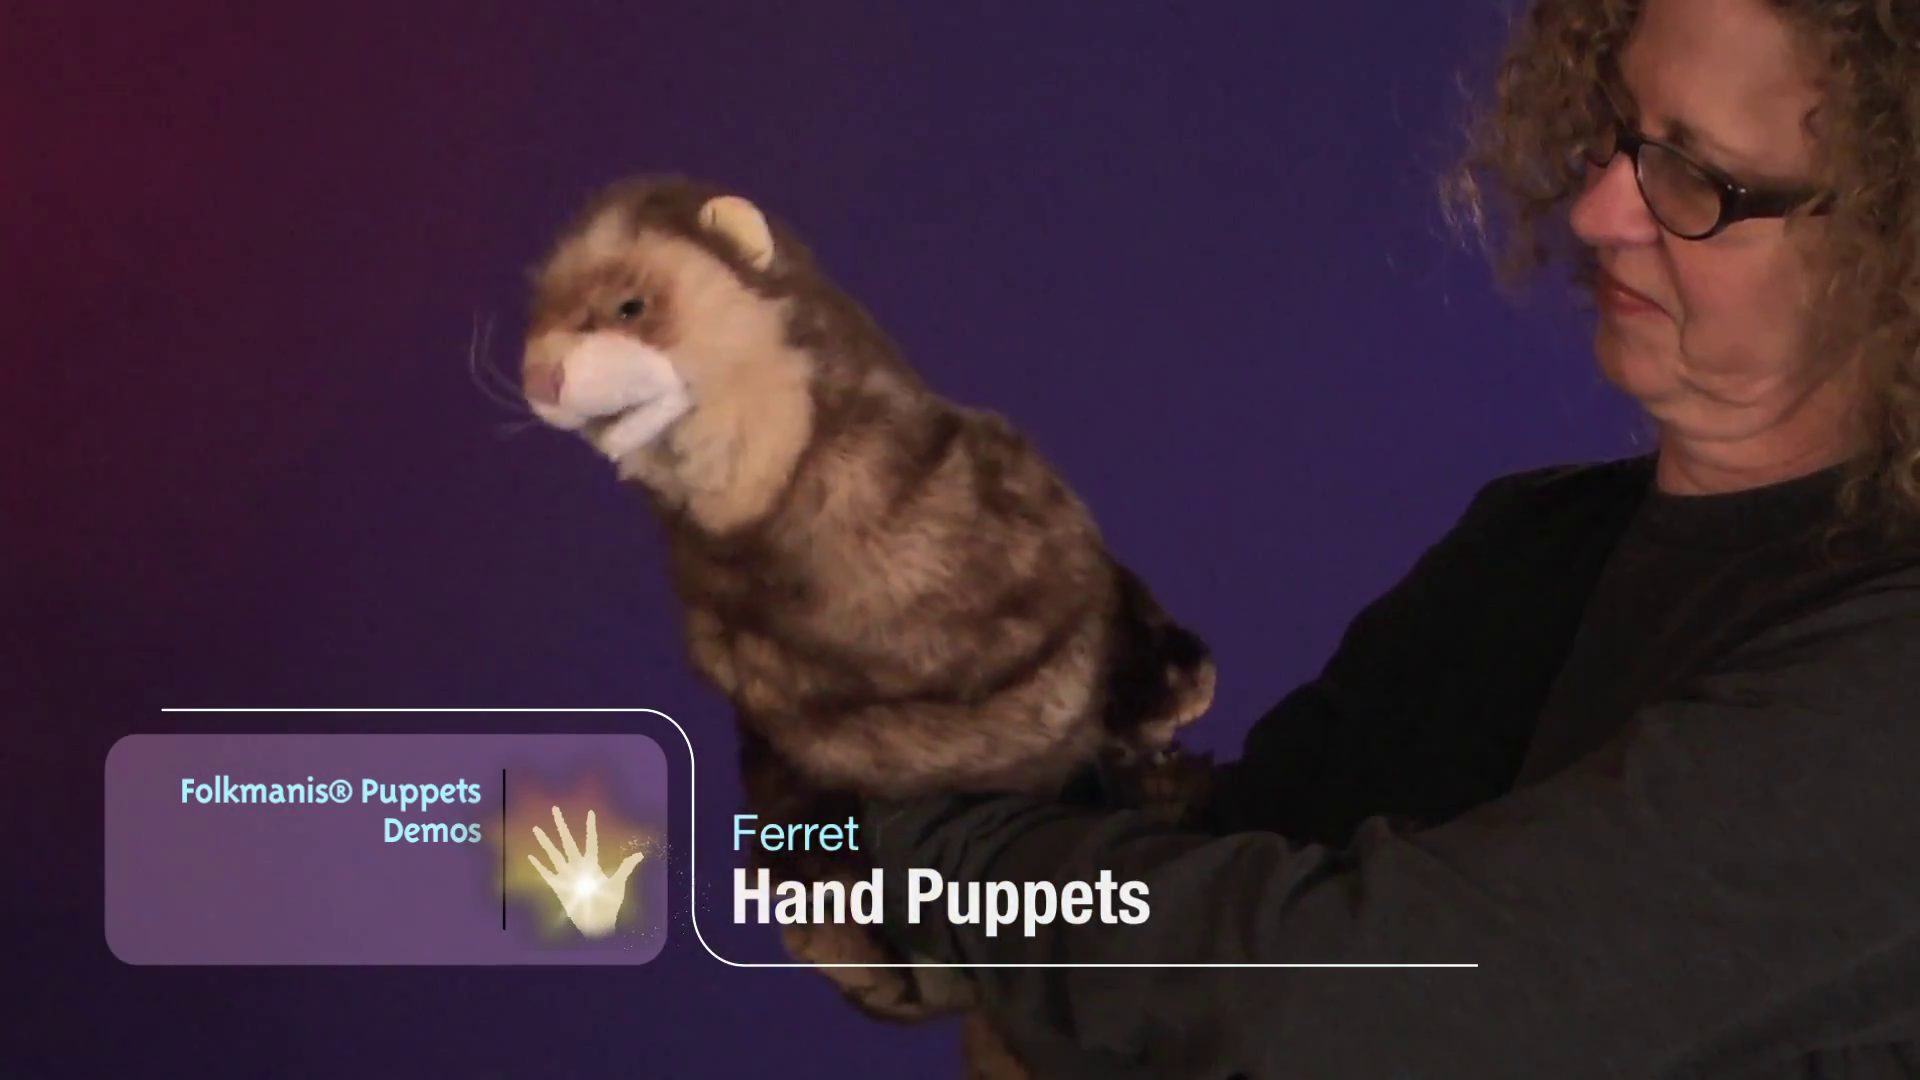 Video 1: Folkmanis hand puppet ferret